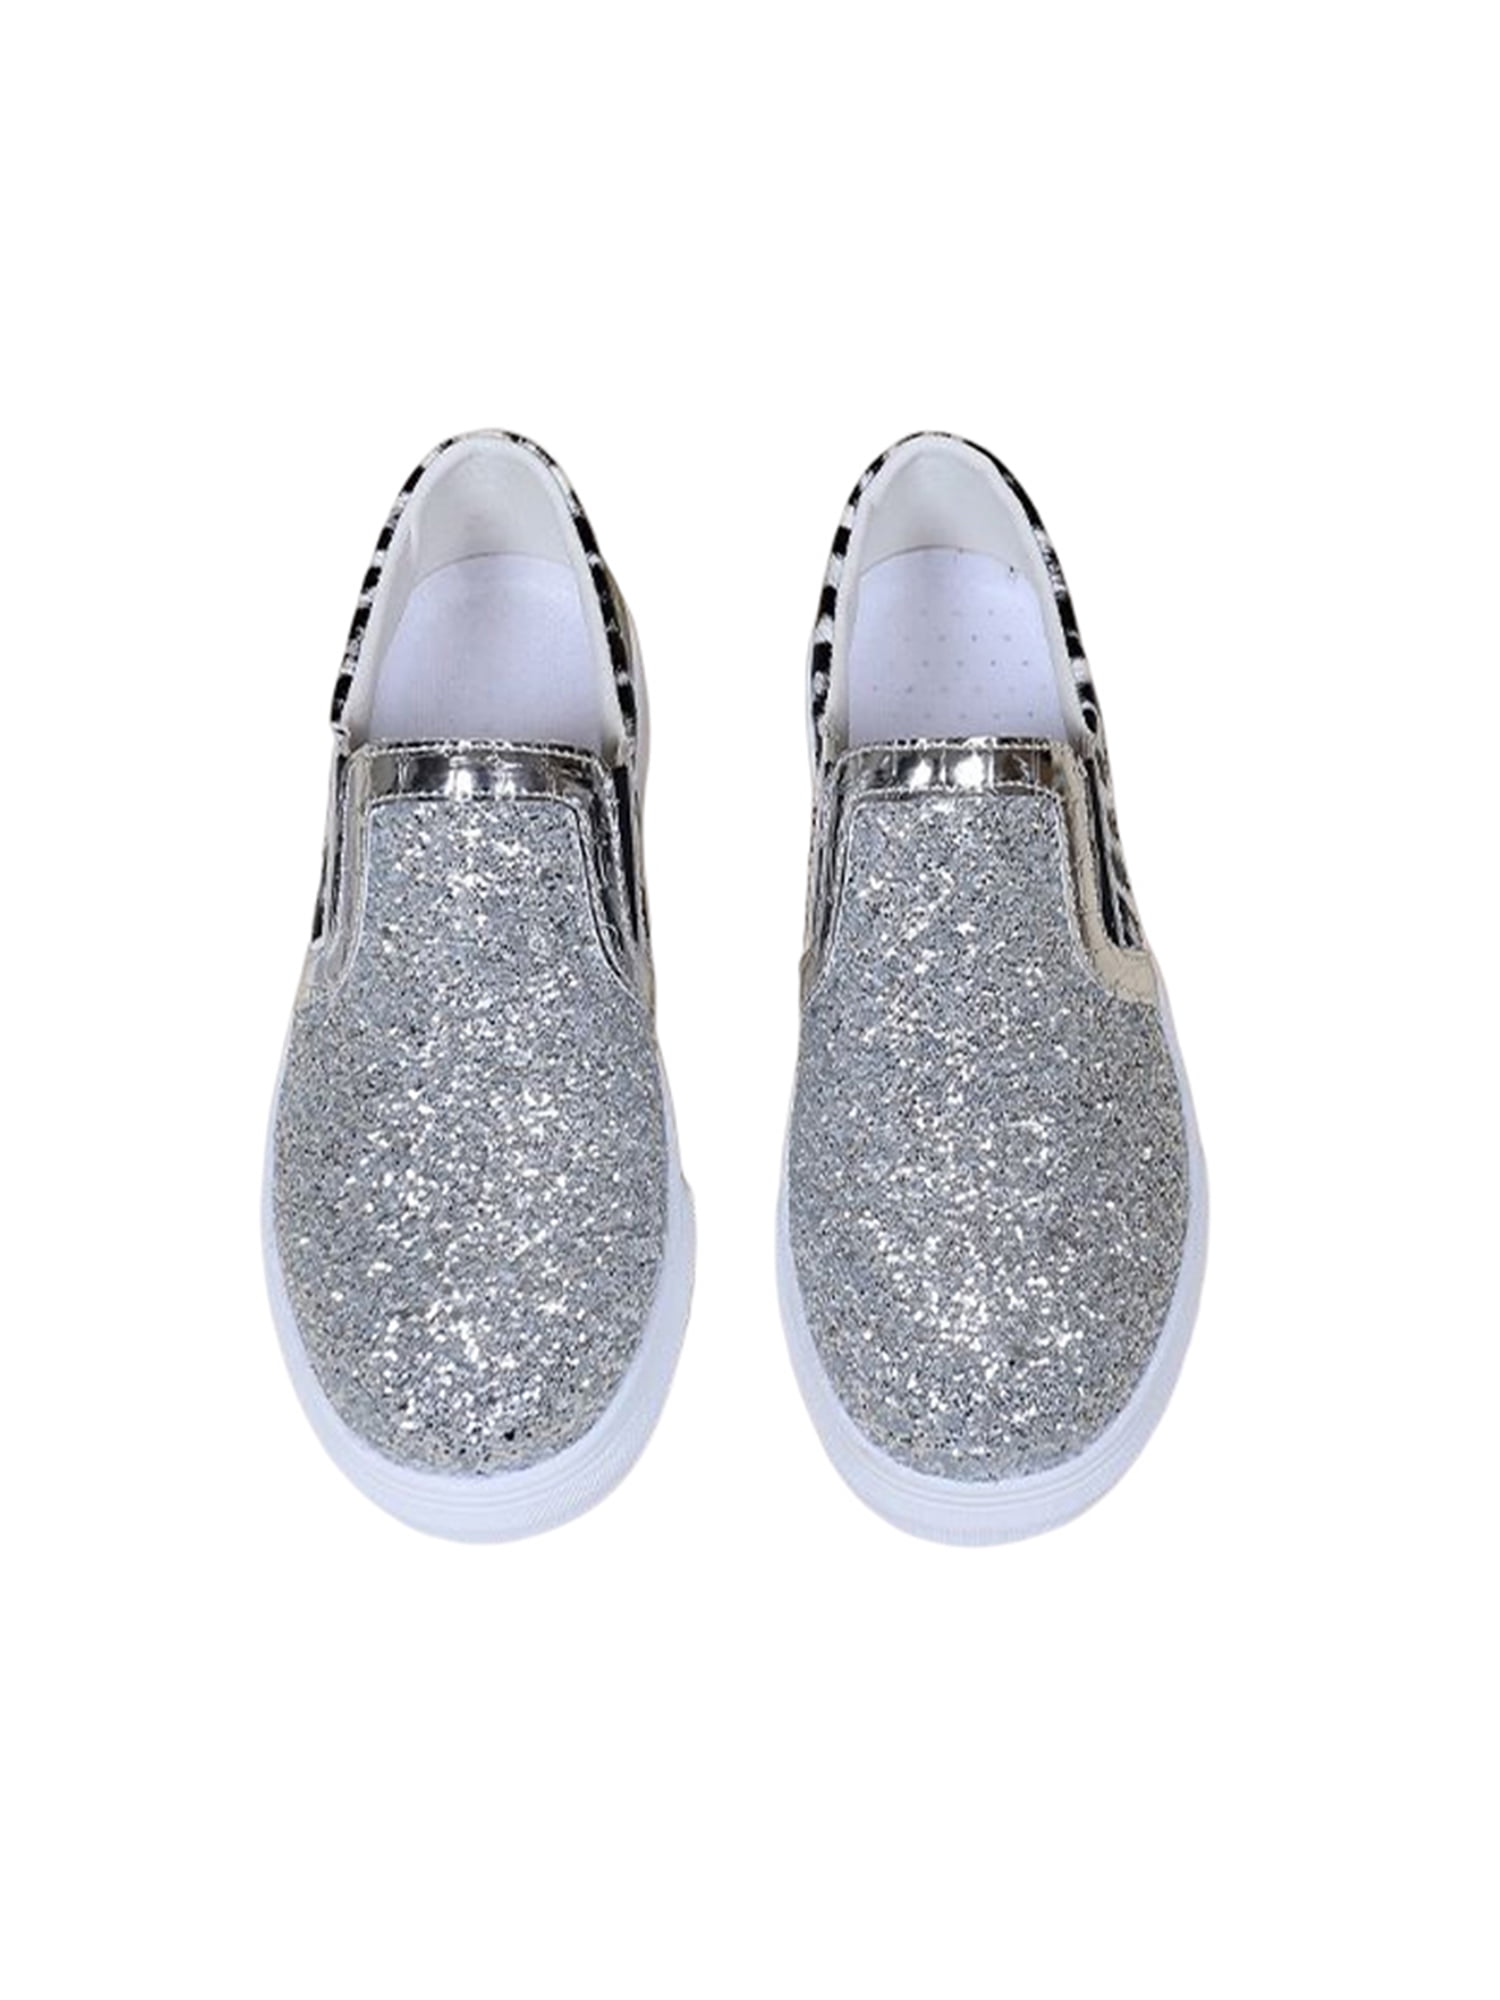 Crocowalk Womens Casual Shoes Slip On Flats Glitter Loafers Women Boat Shoe Outdoor Fashion Sole Moccasins Silver 5.5 - Walmart.com